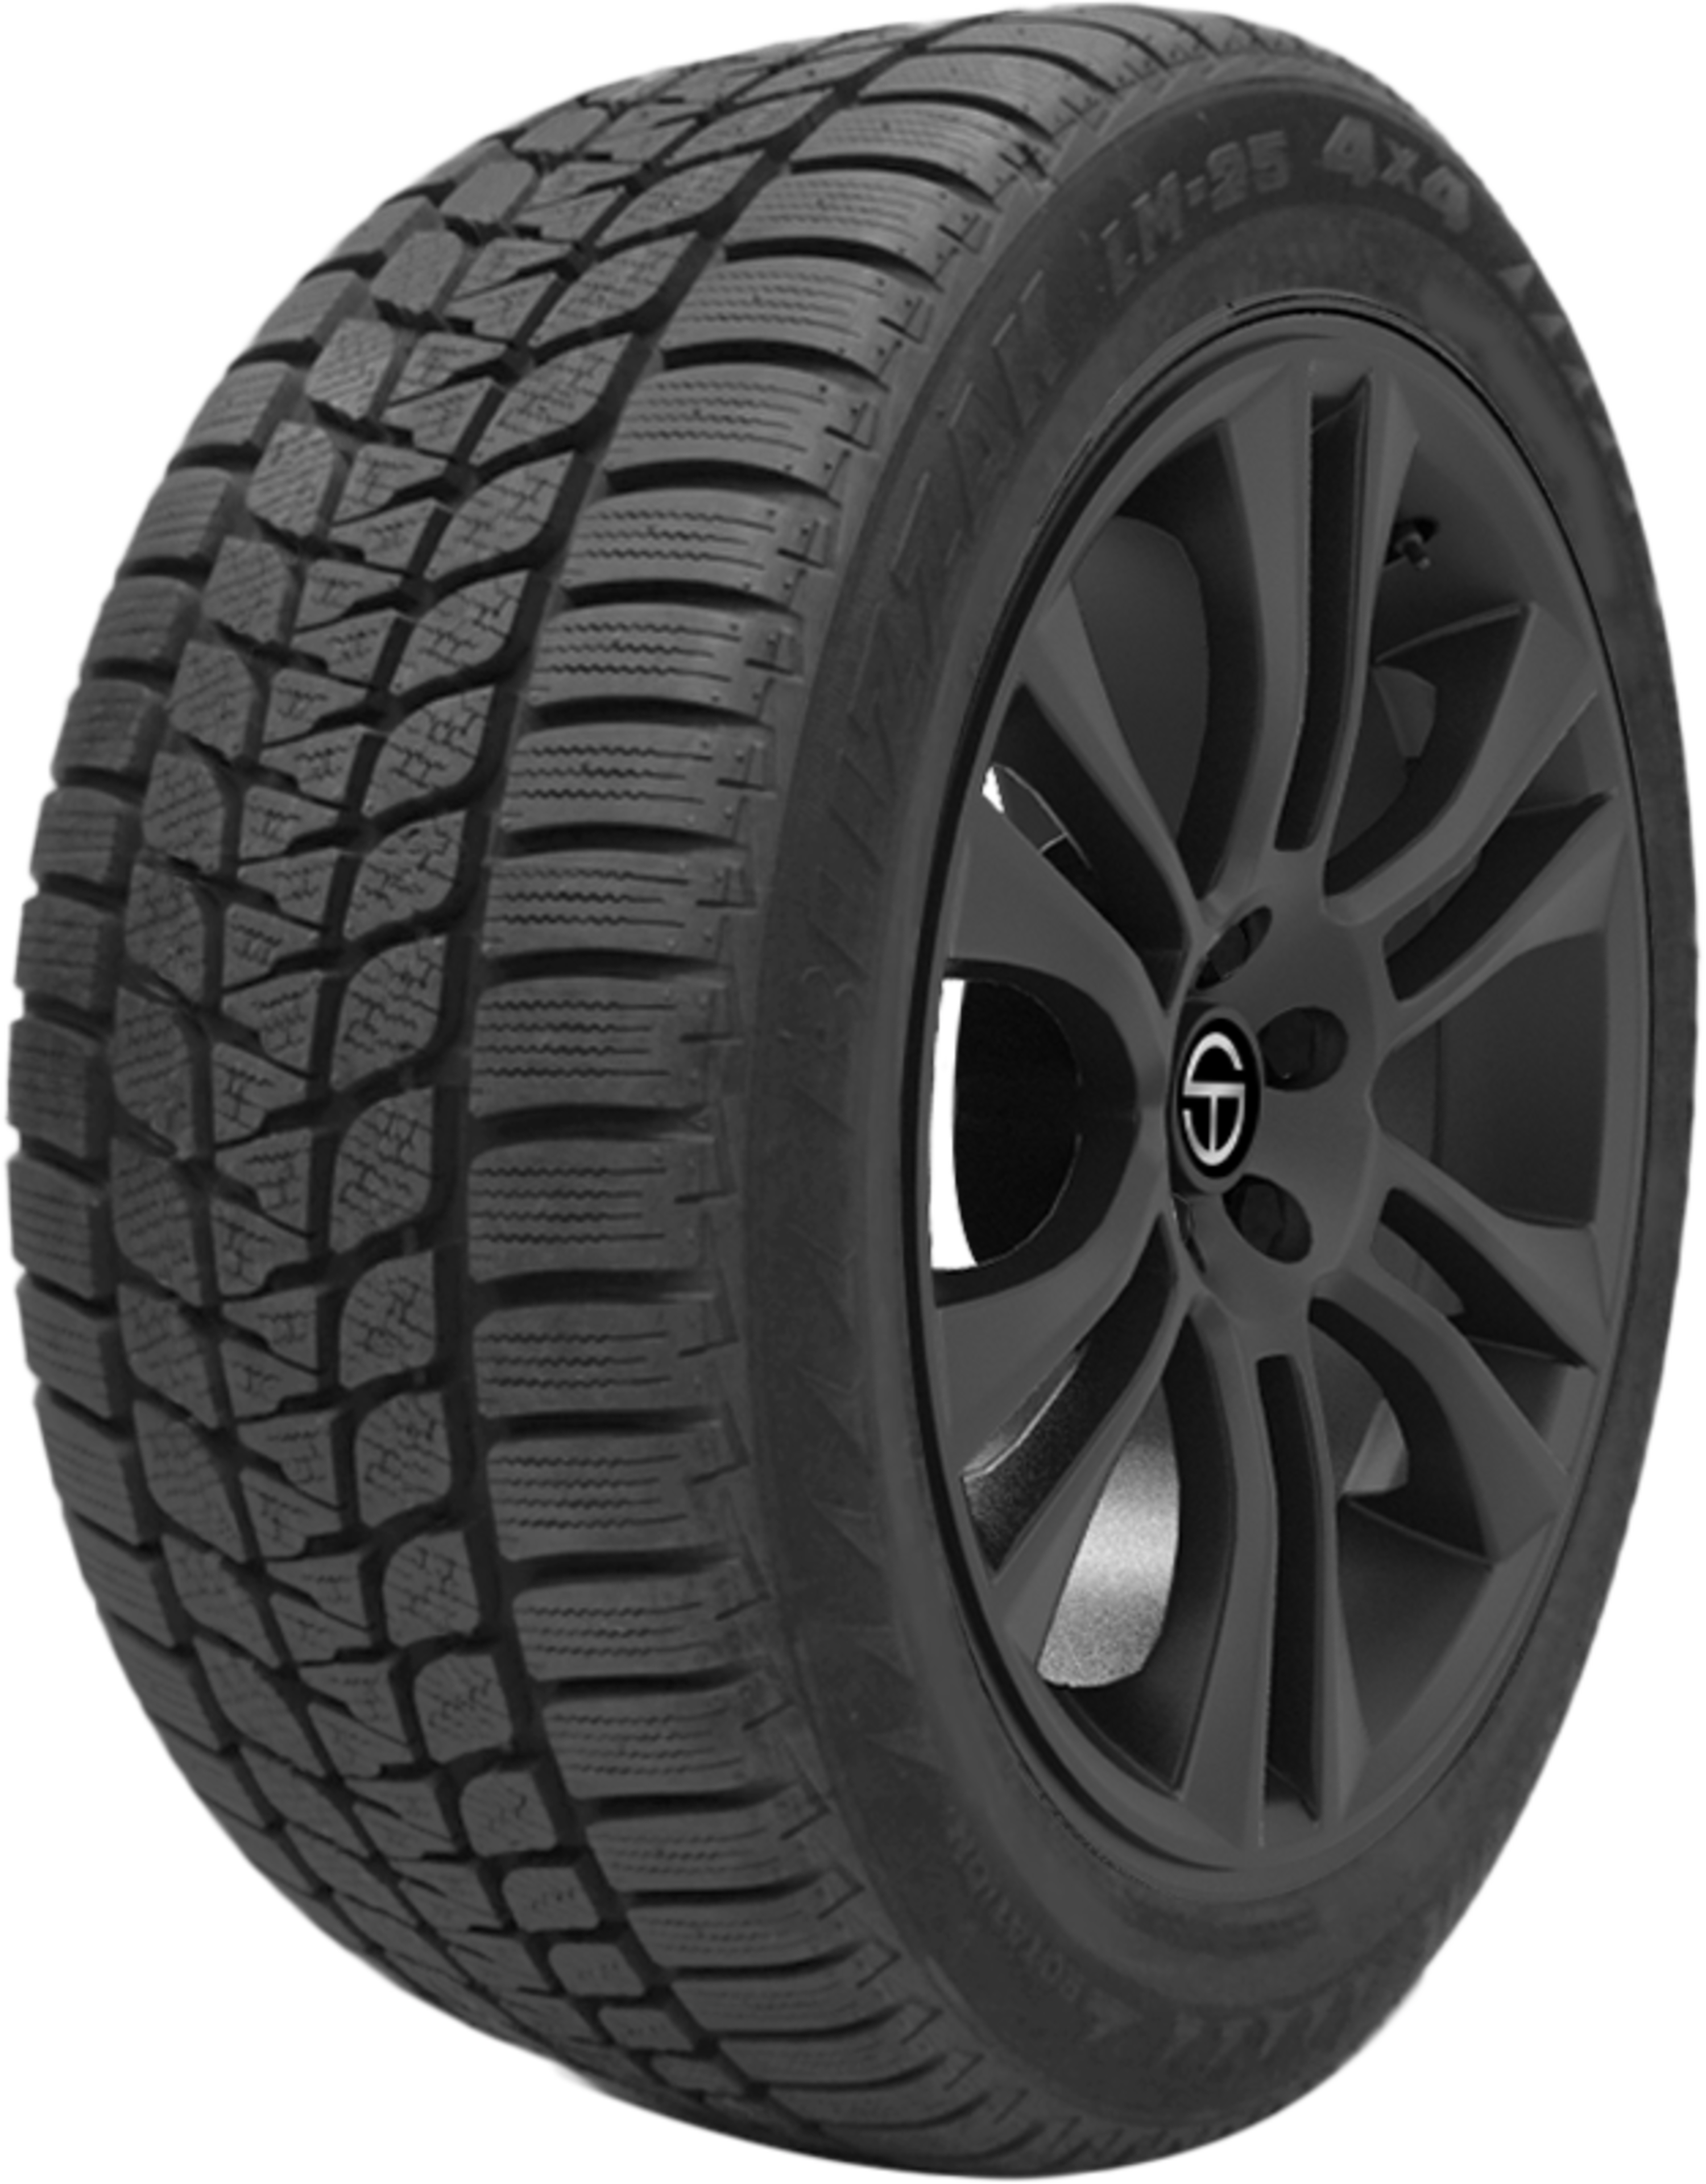 4X4 Bridgestone LM-25 MOE | Online Blizzak Buy Tires SimpleTire